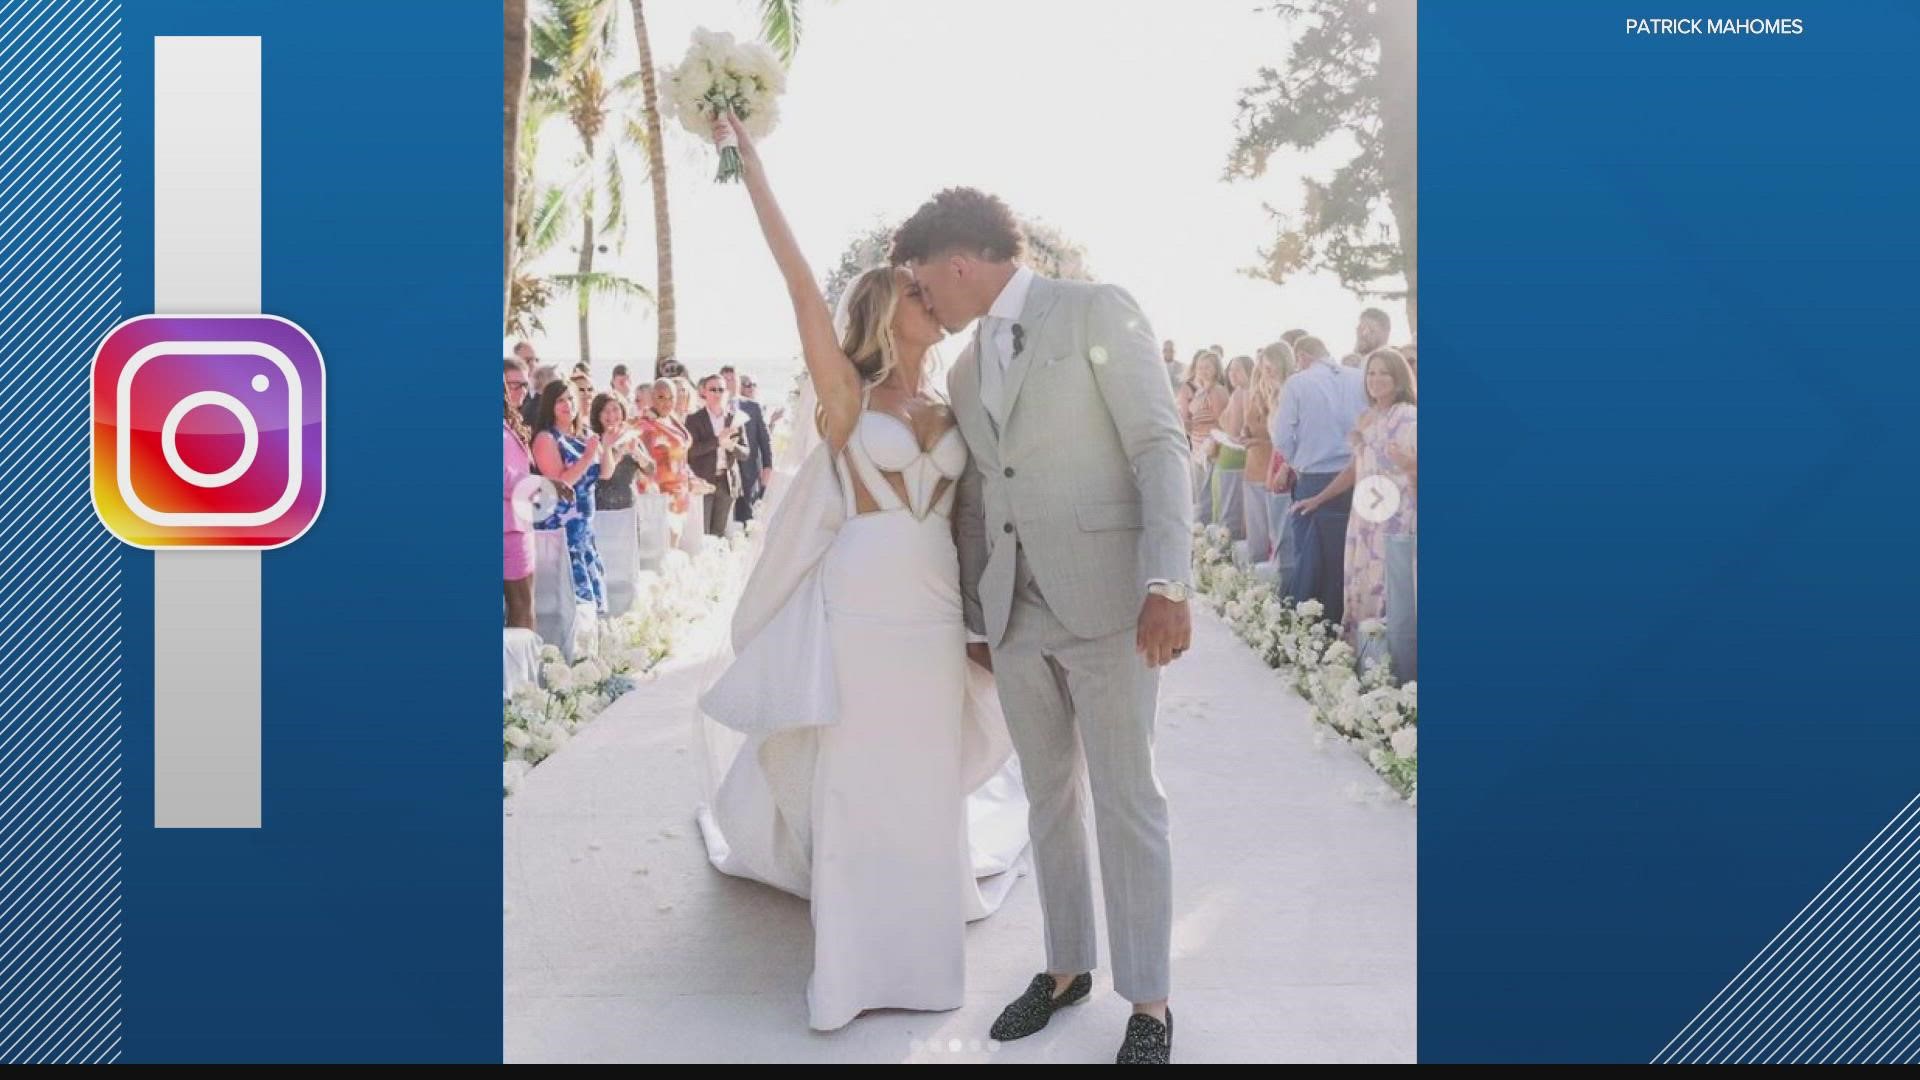 Patrick Mahomes marries high school sweetheart Brittany Matthews